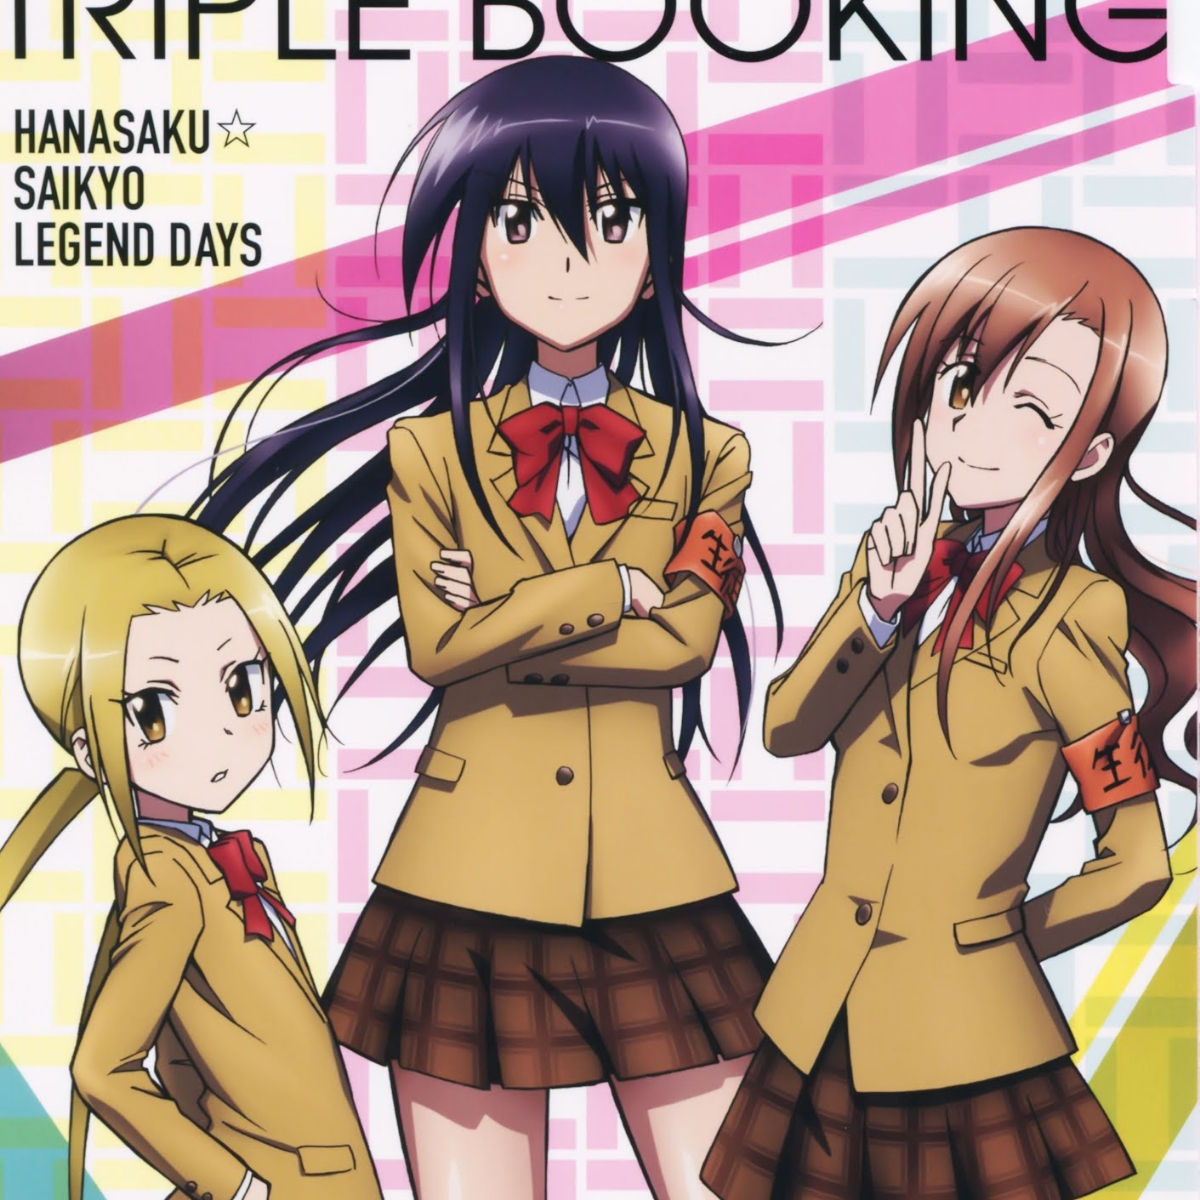 Triple Booking - Hanasaku☆Saikyou Legend Days